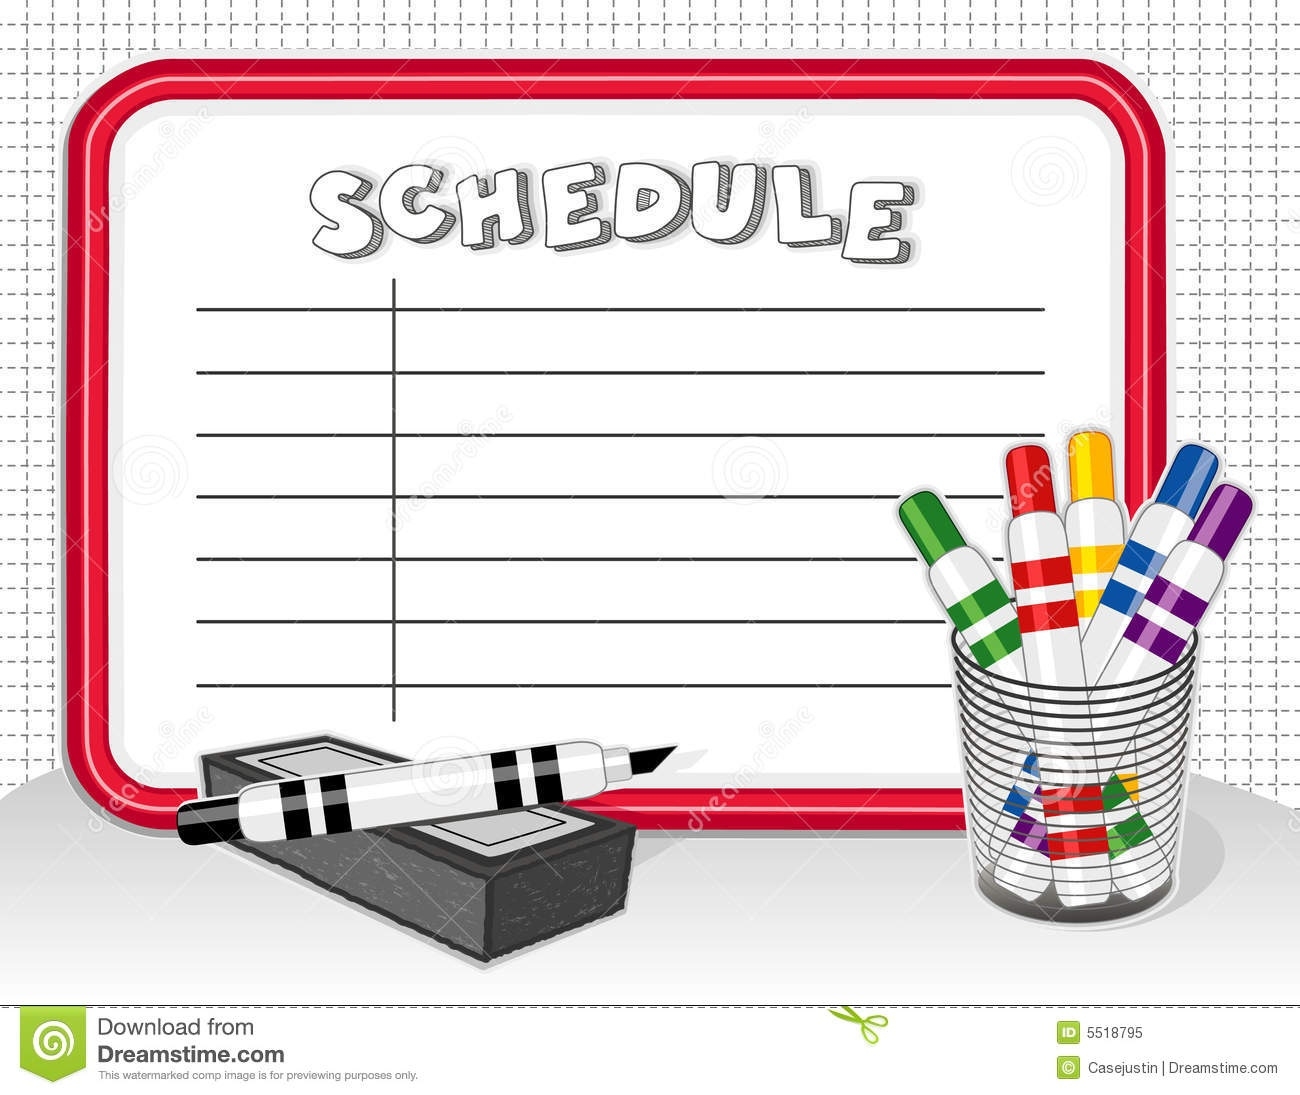 daily class schedule clipart